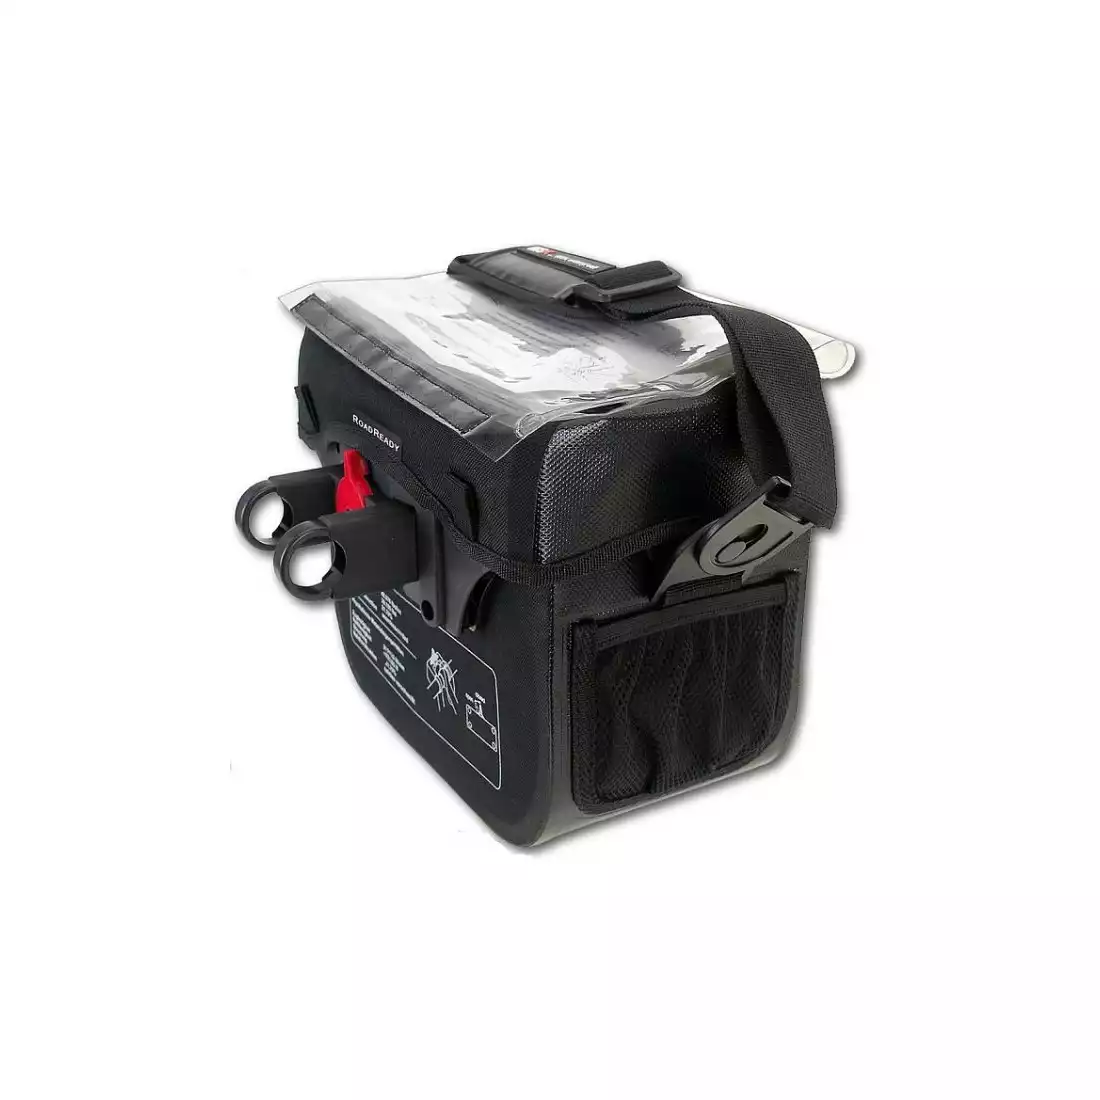 MSX - torebka na kierownice CLS 55 - kolor: Czarny